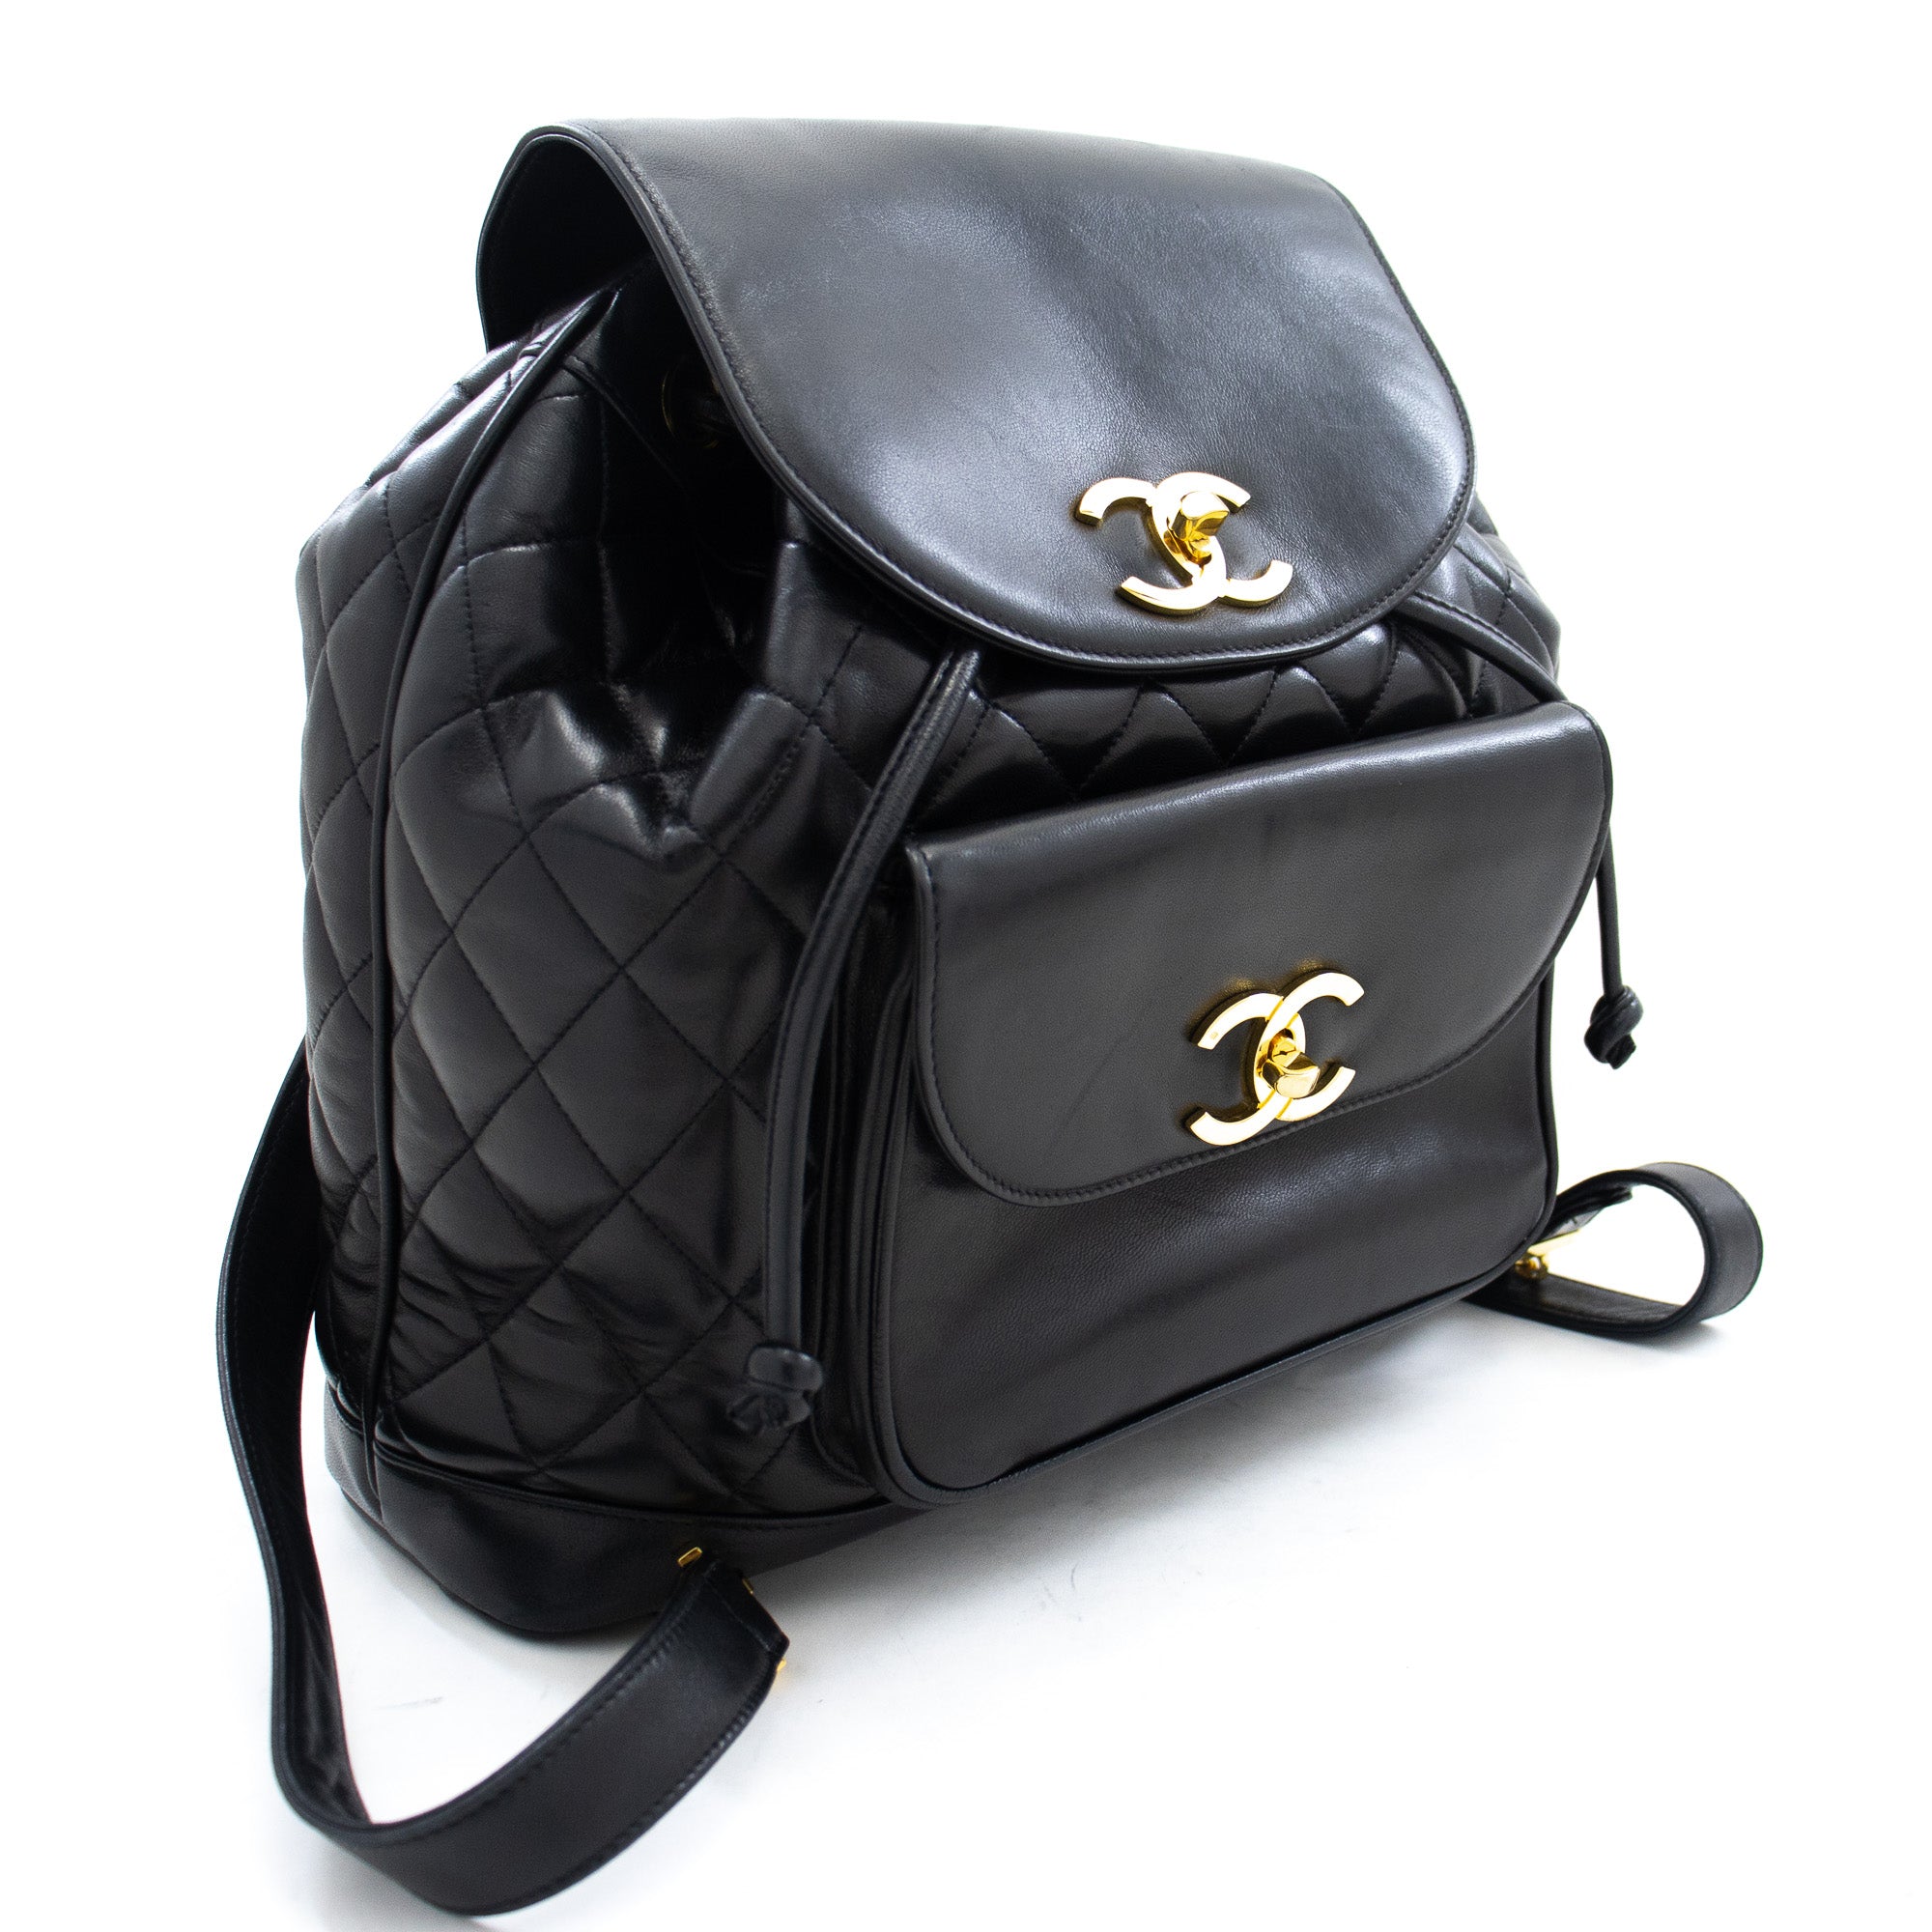 CHANEL Full Flap Chain Shoulder Bag Black Quilted Lambskin Leather j95 –  hannari-shop